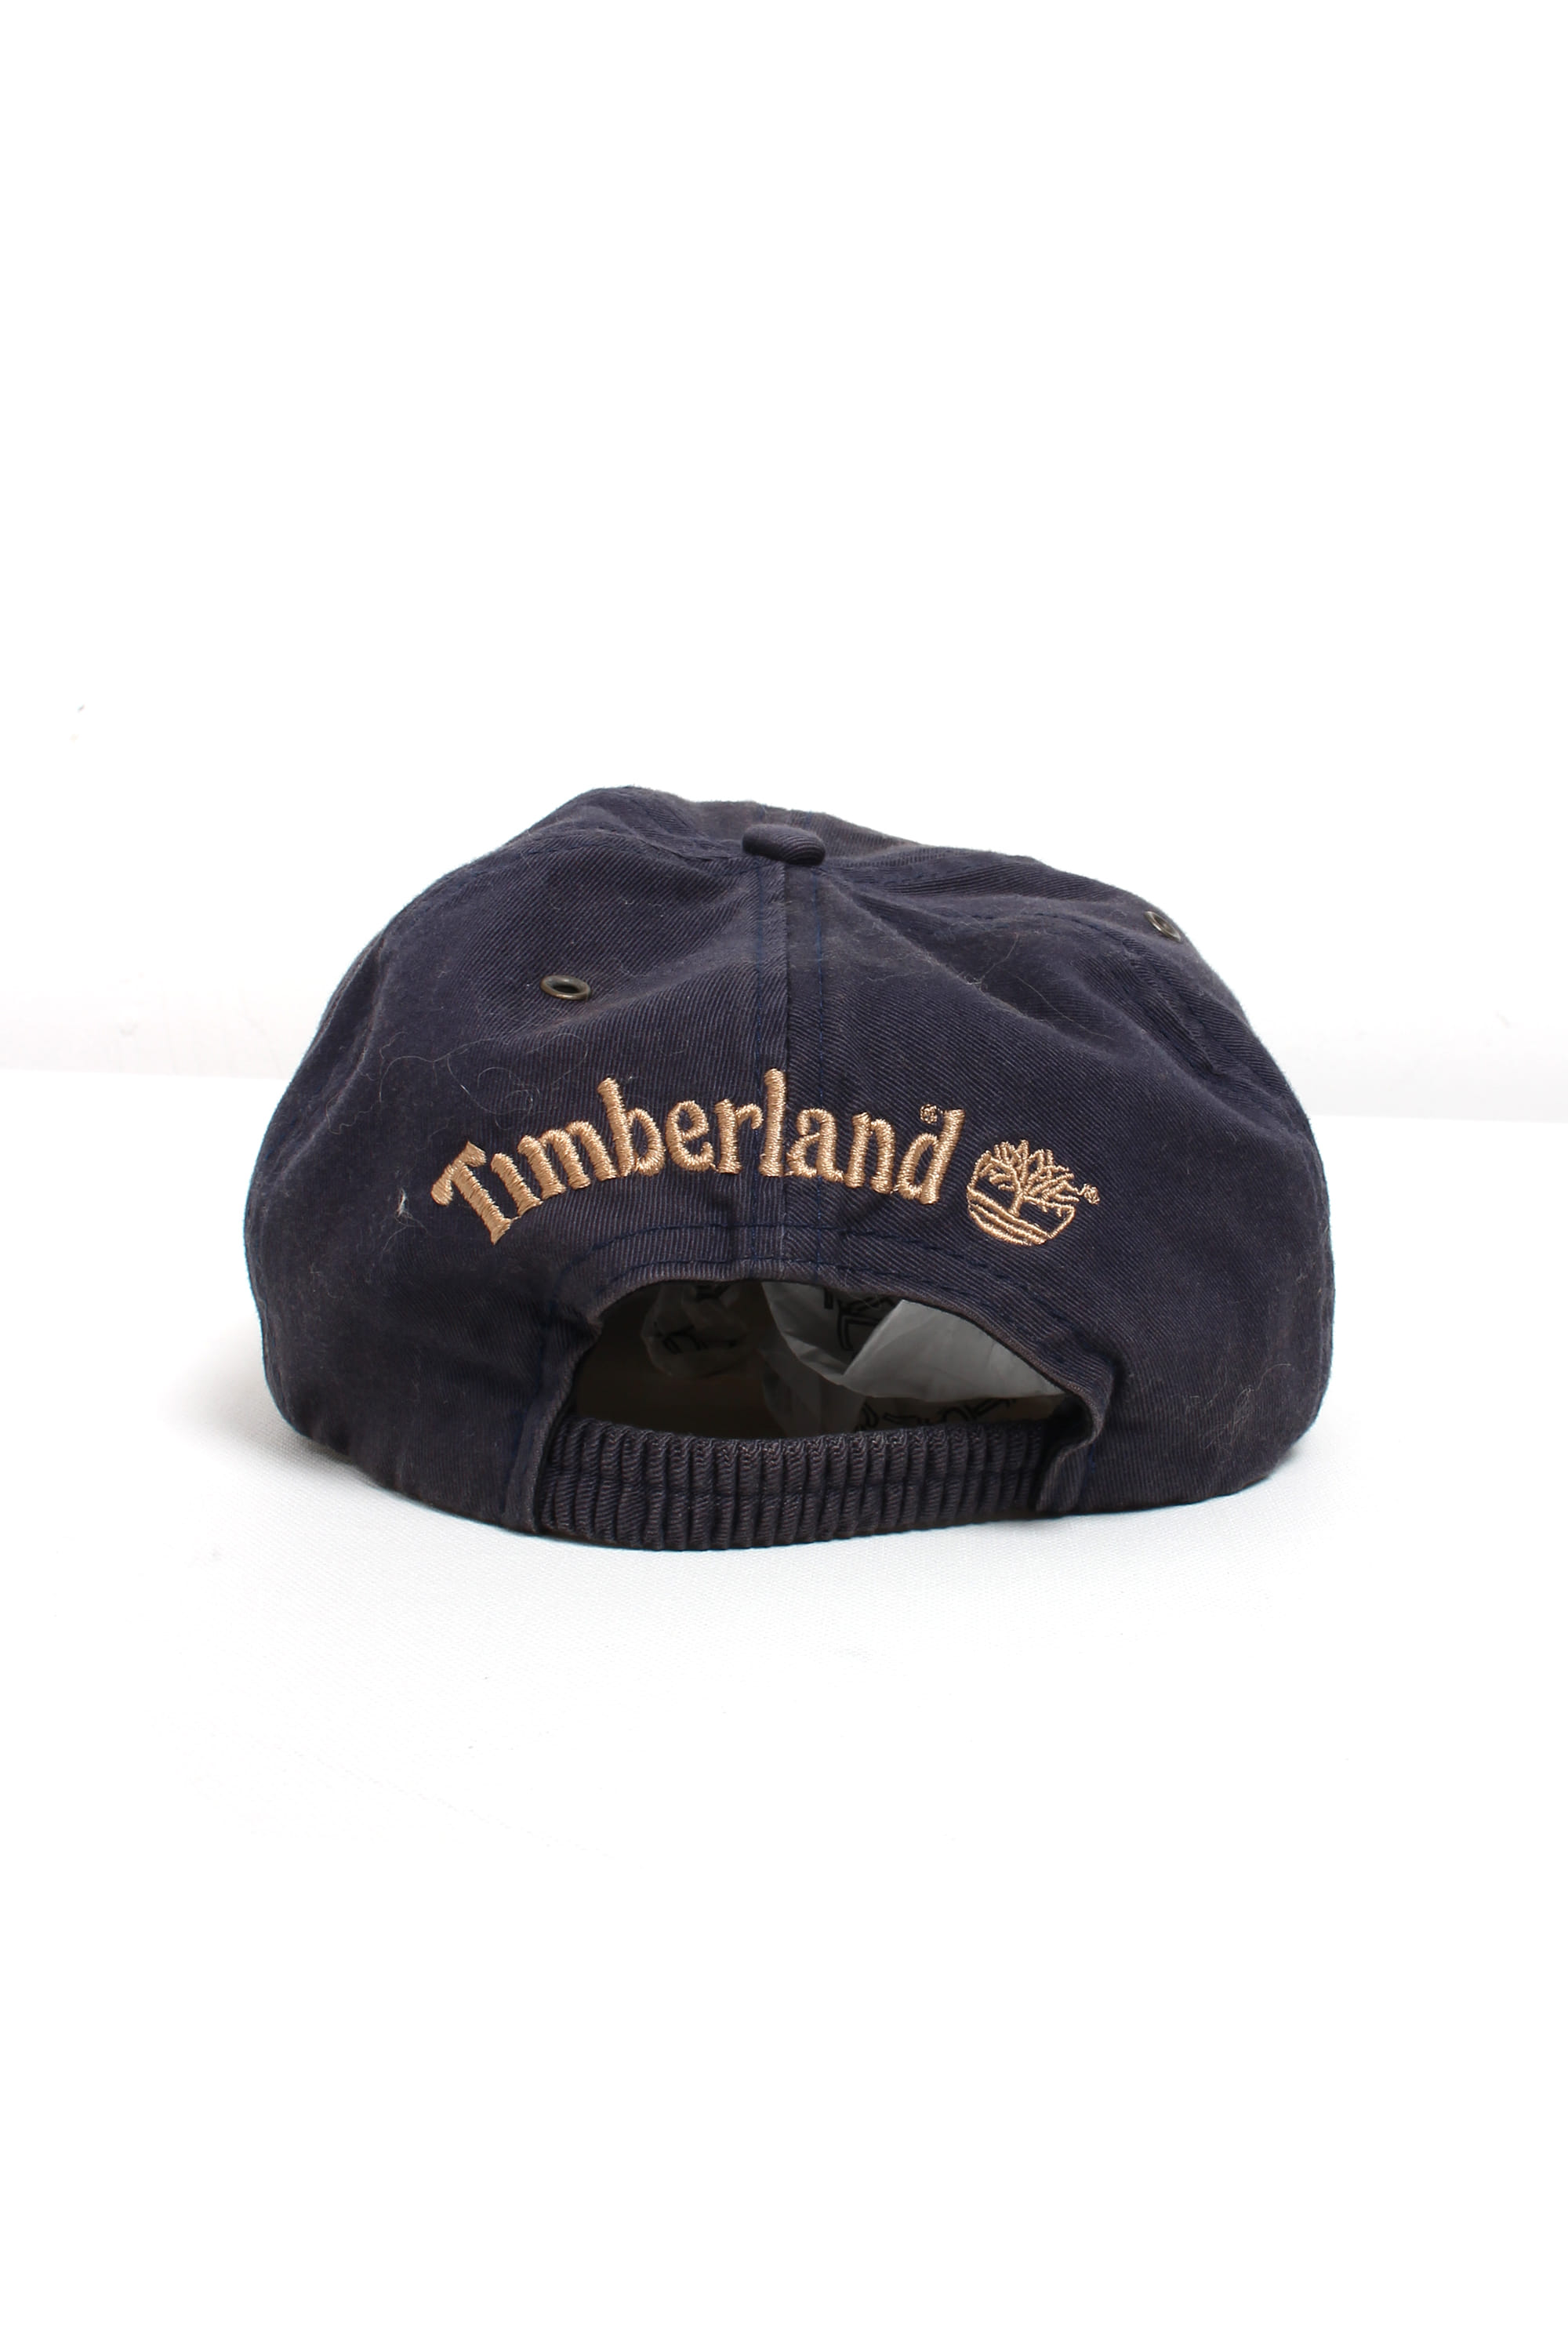 Vintage Timberland Ball Cap